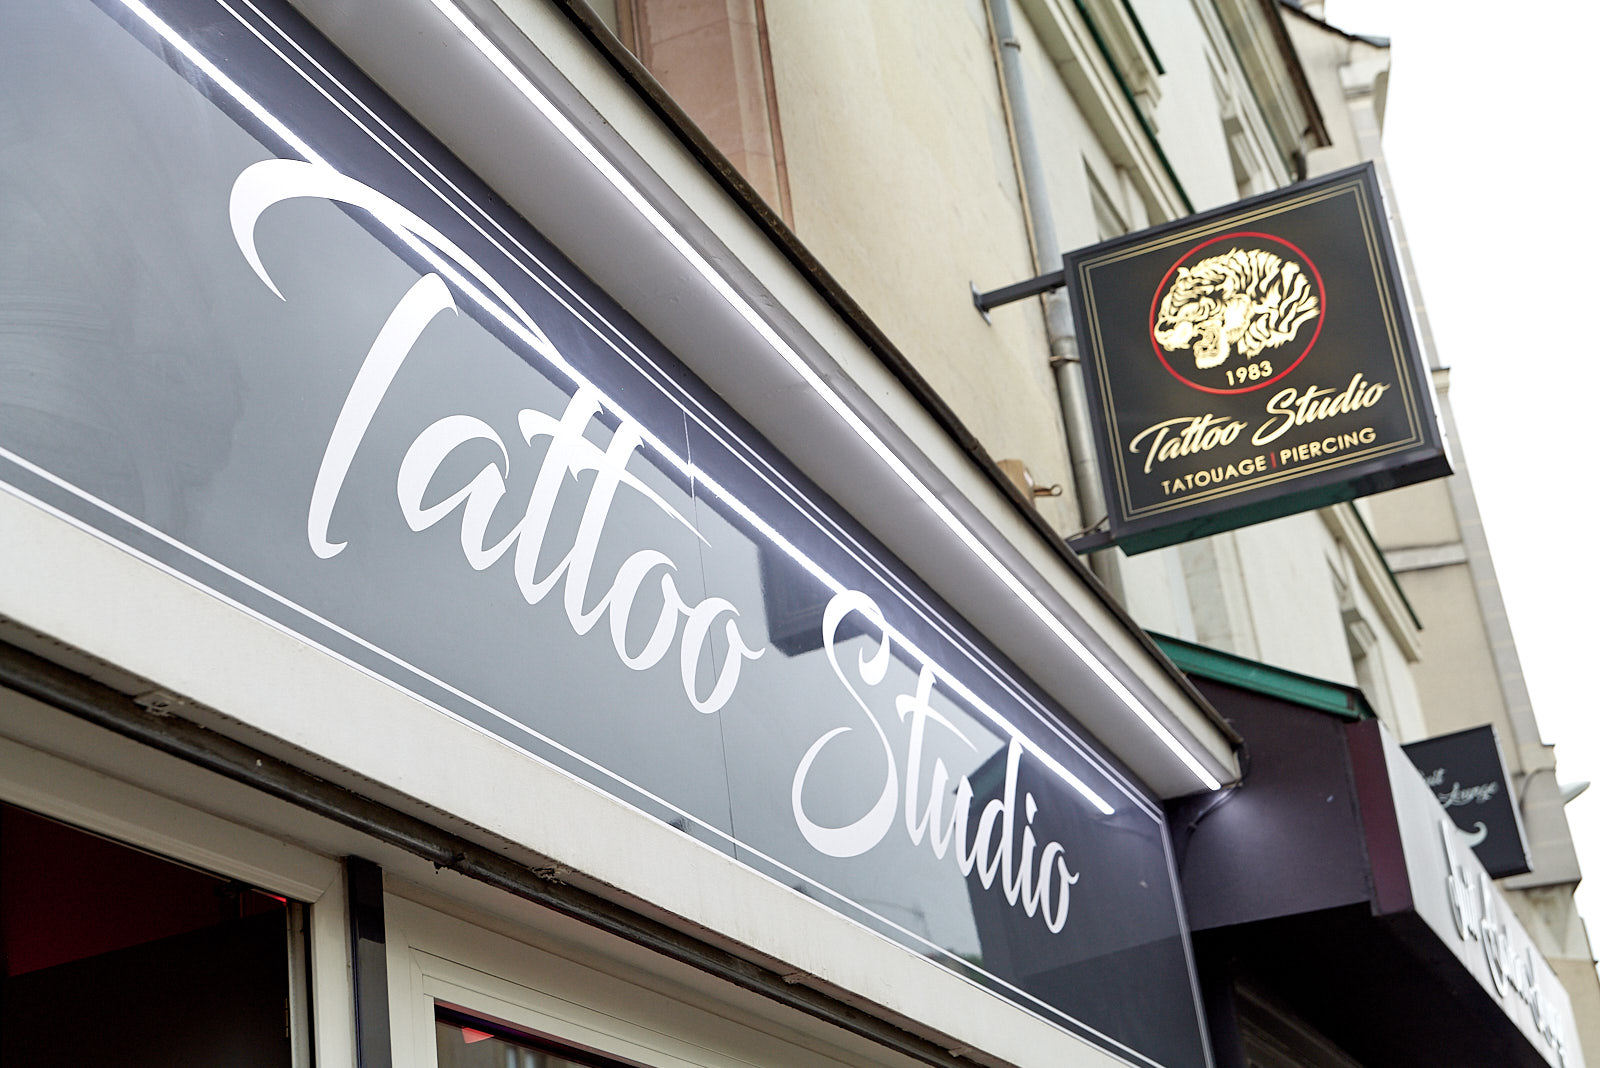 Tattoo artist targets unlicensed inking | News | timesargus.com